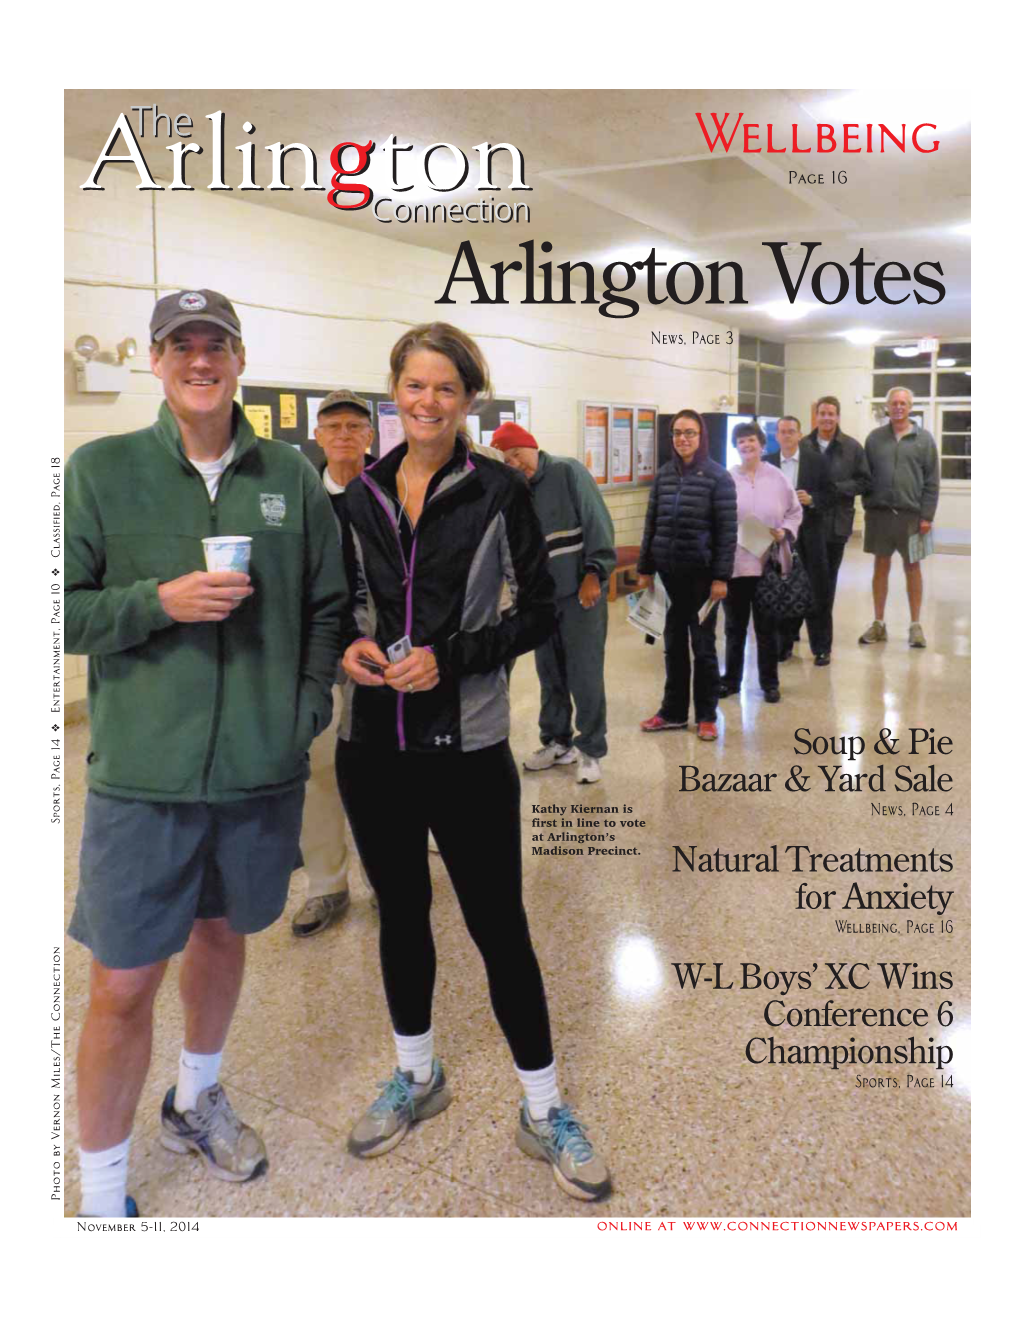 Arlington Votes News, Page 3